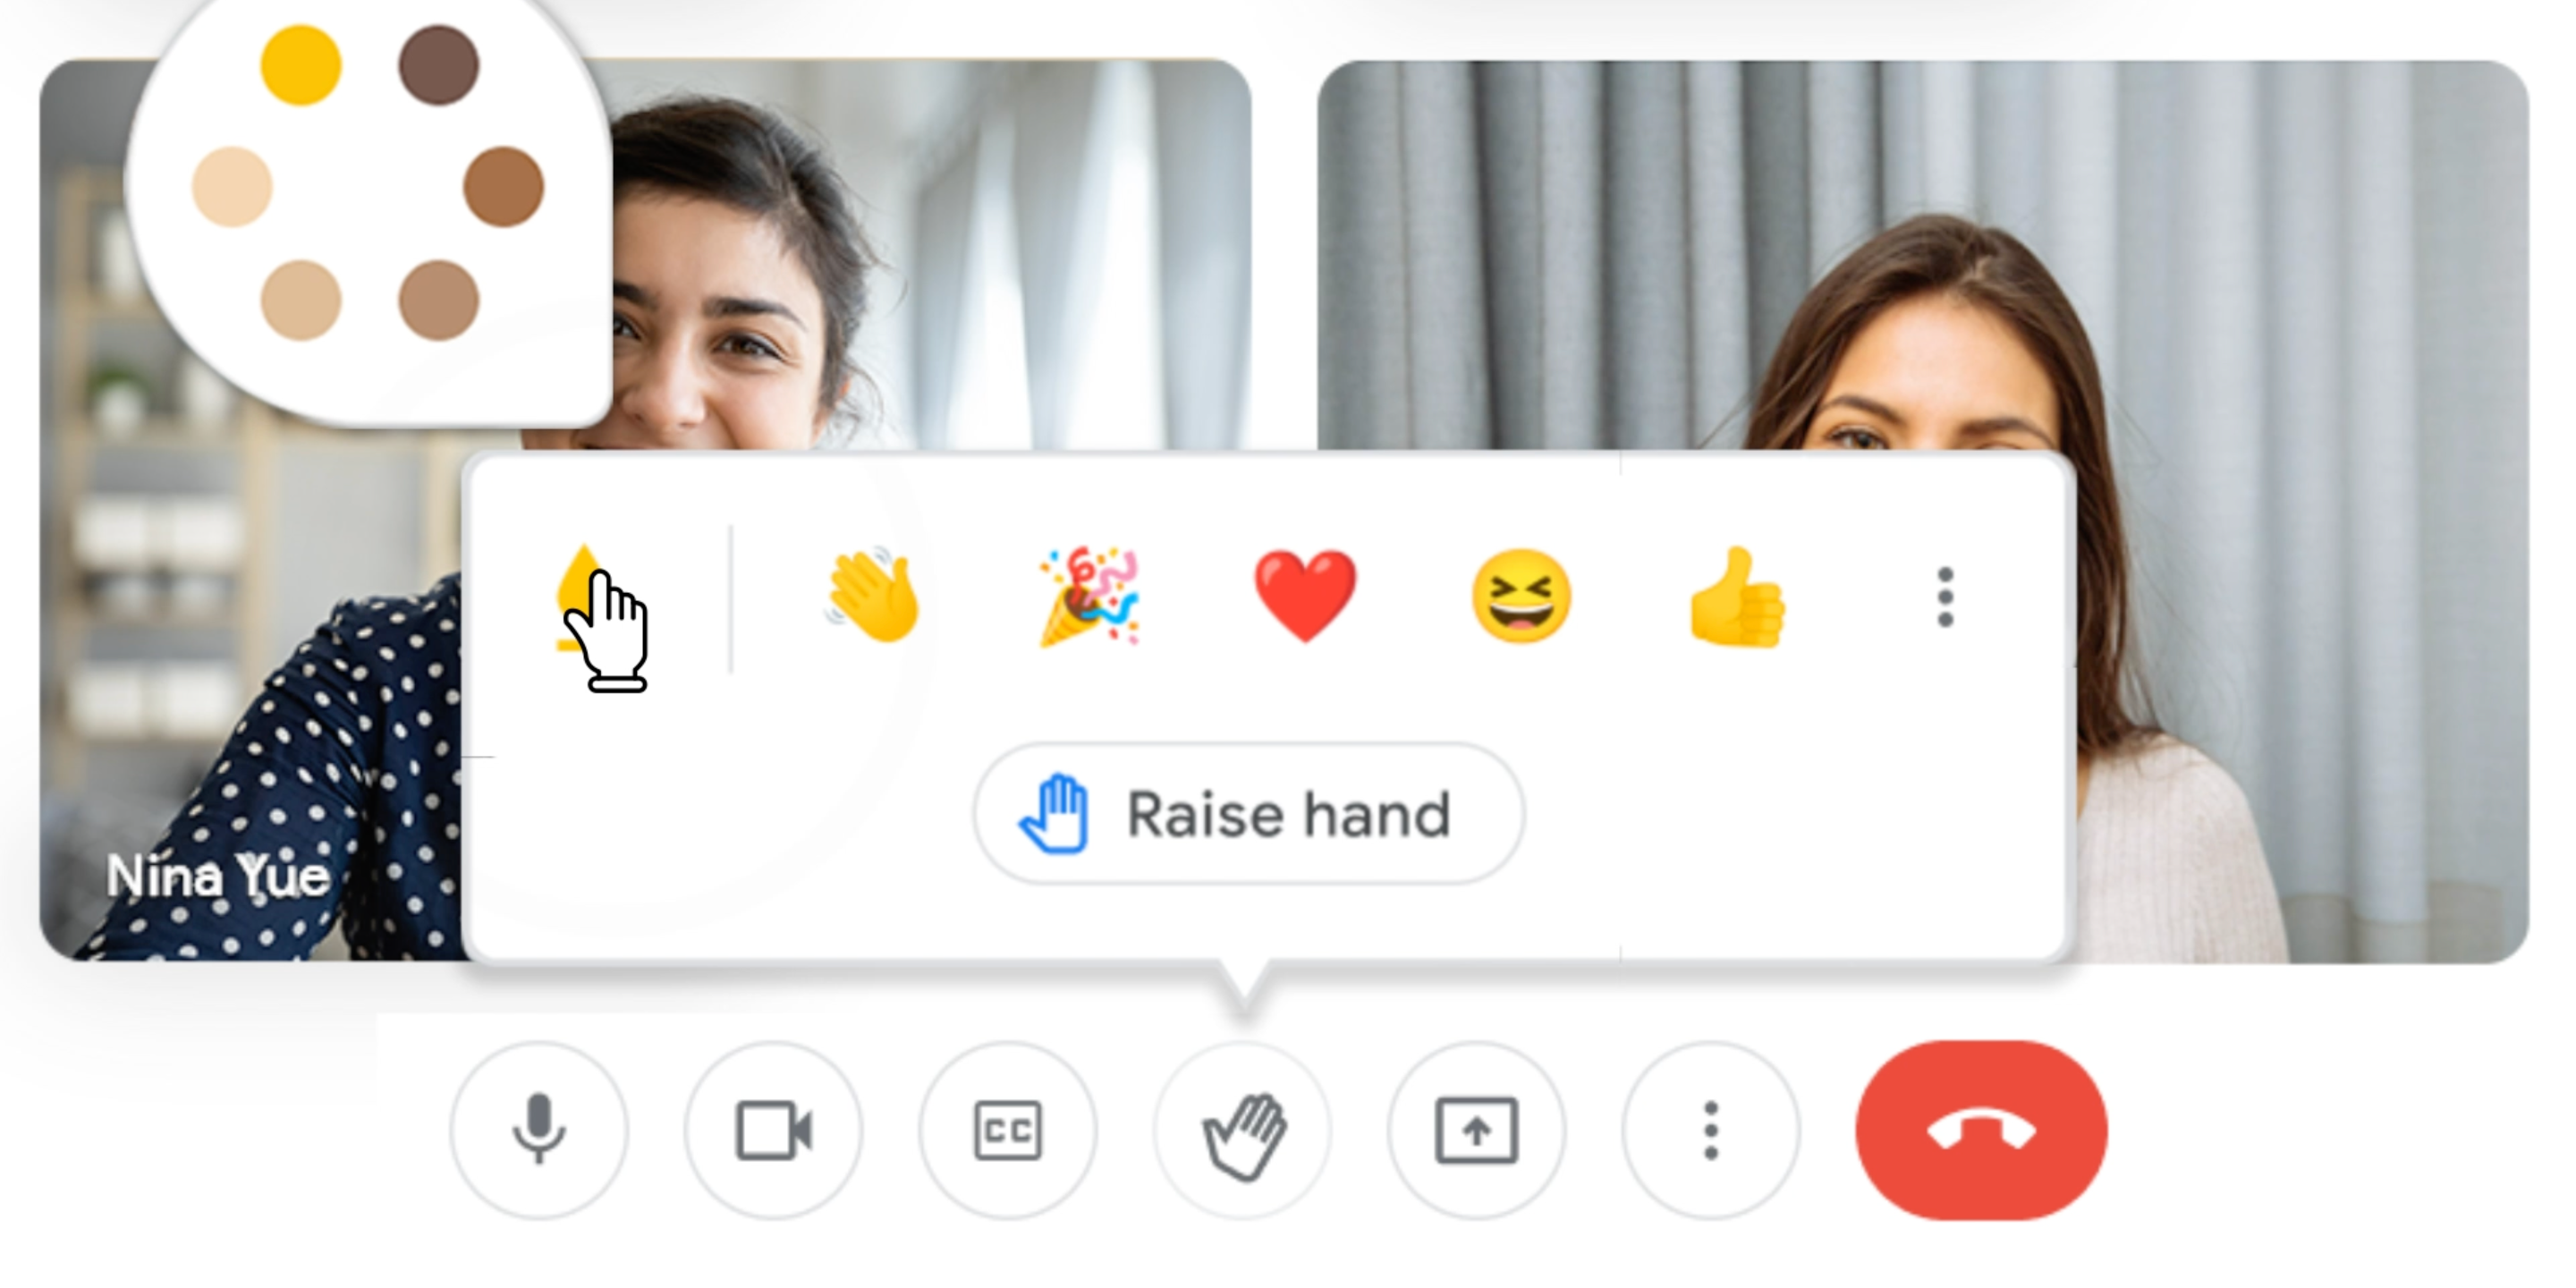 emoji reactions during a Google Meet